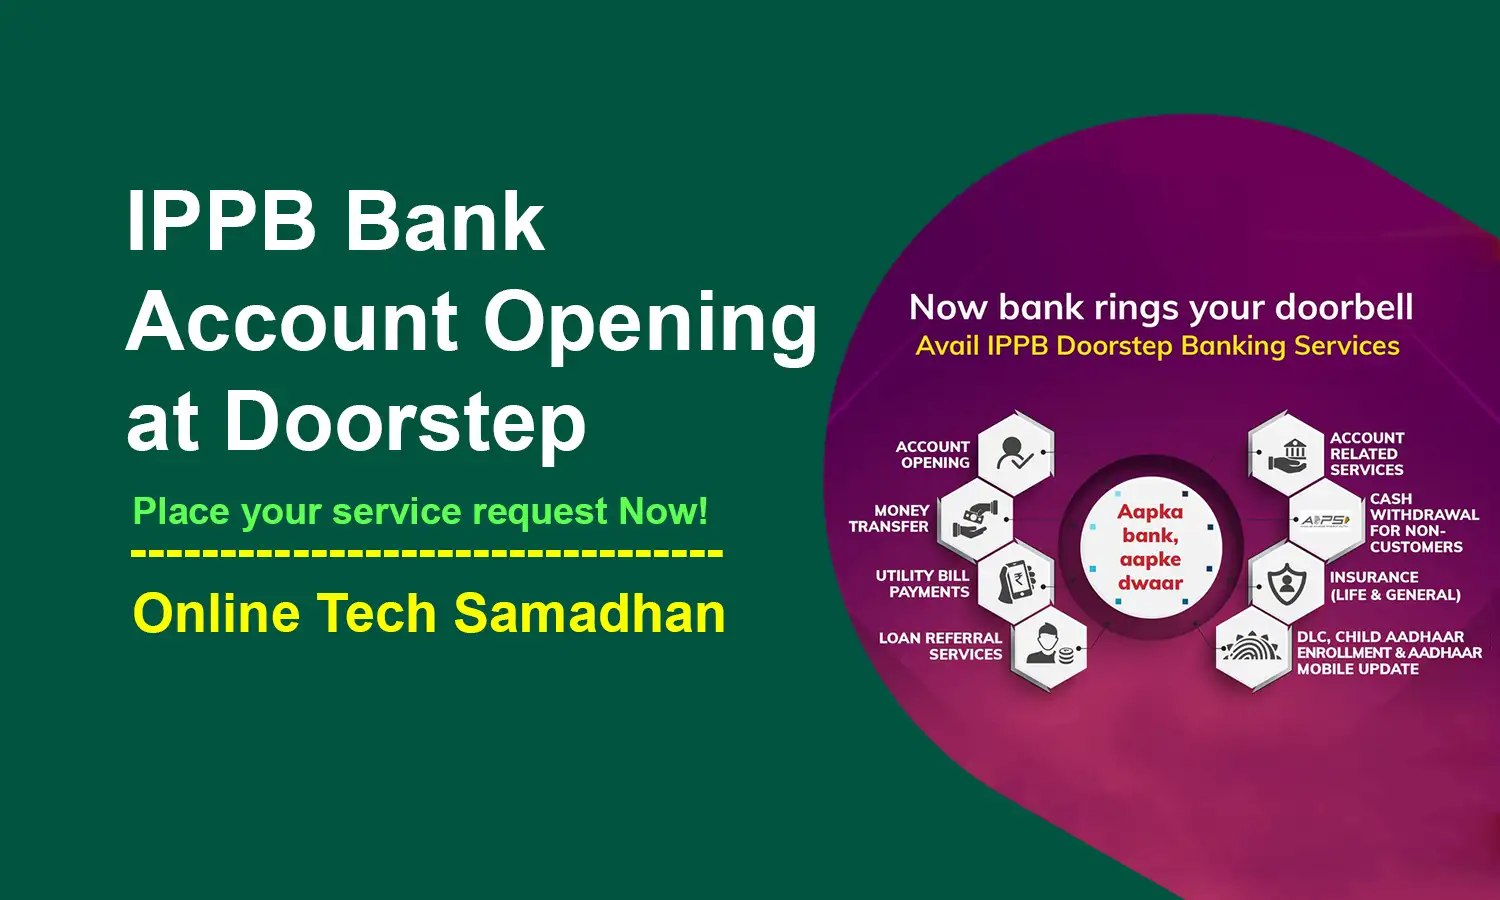 IPPB Bank Account Opening at Doorstep